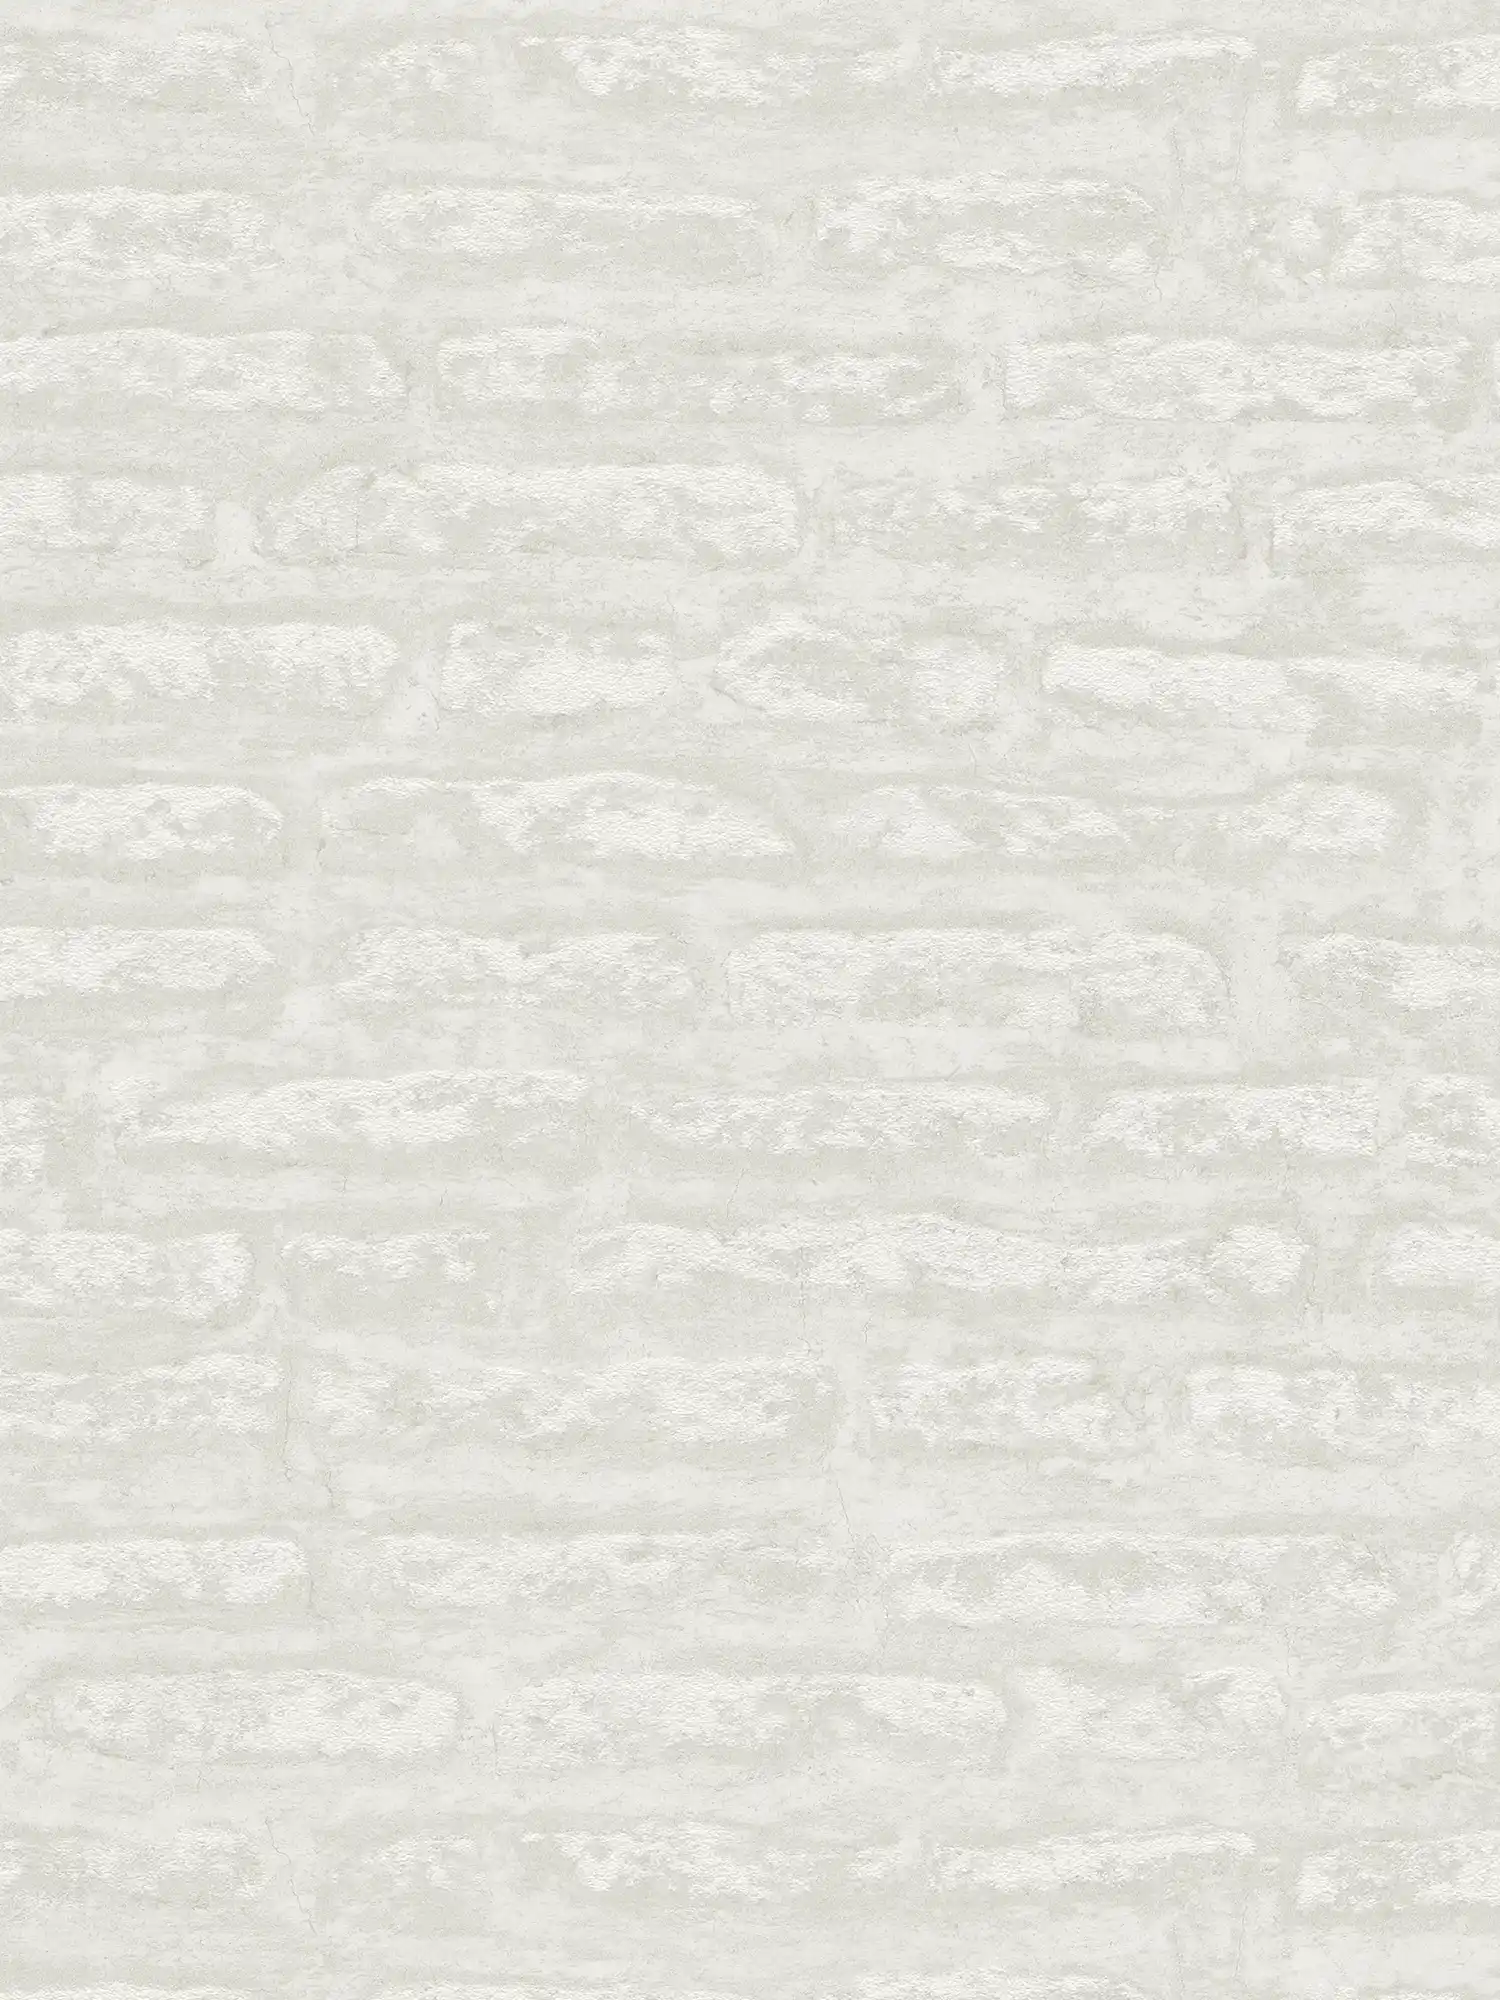 Abstract plaster optics wallpaper in matt - white, light grey
